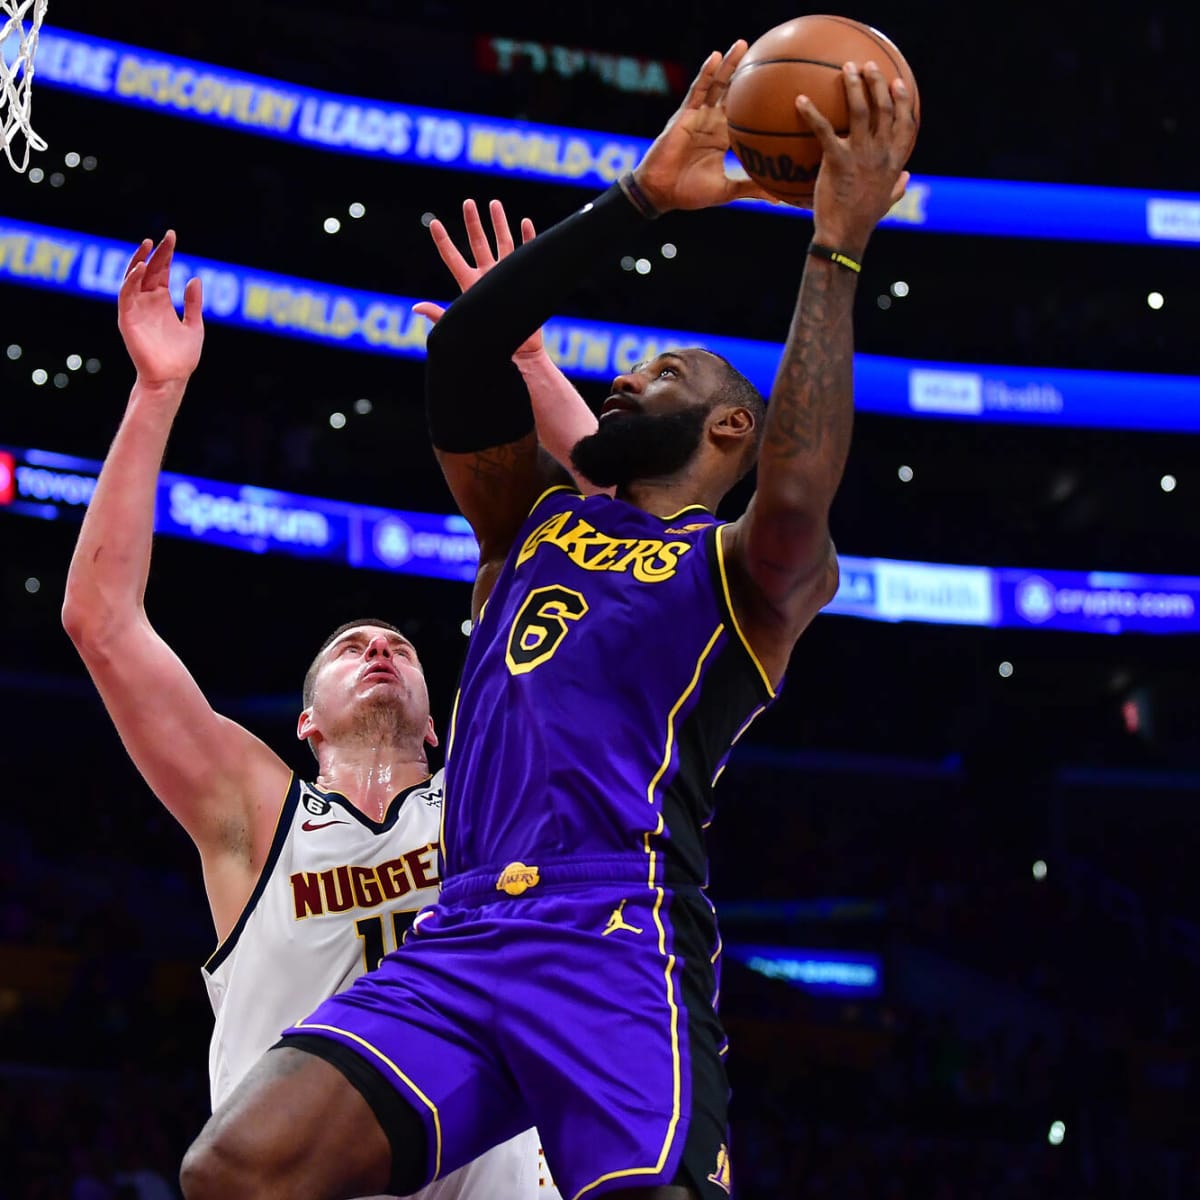 Los Angeles Lakers vs Washington Wizards Prediction: Injury Report